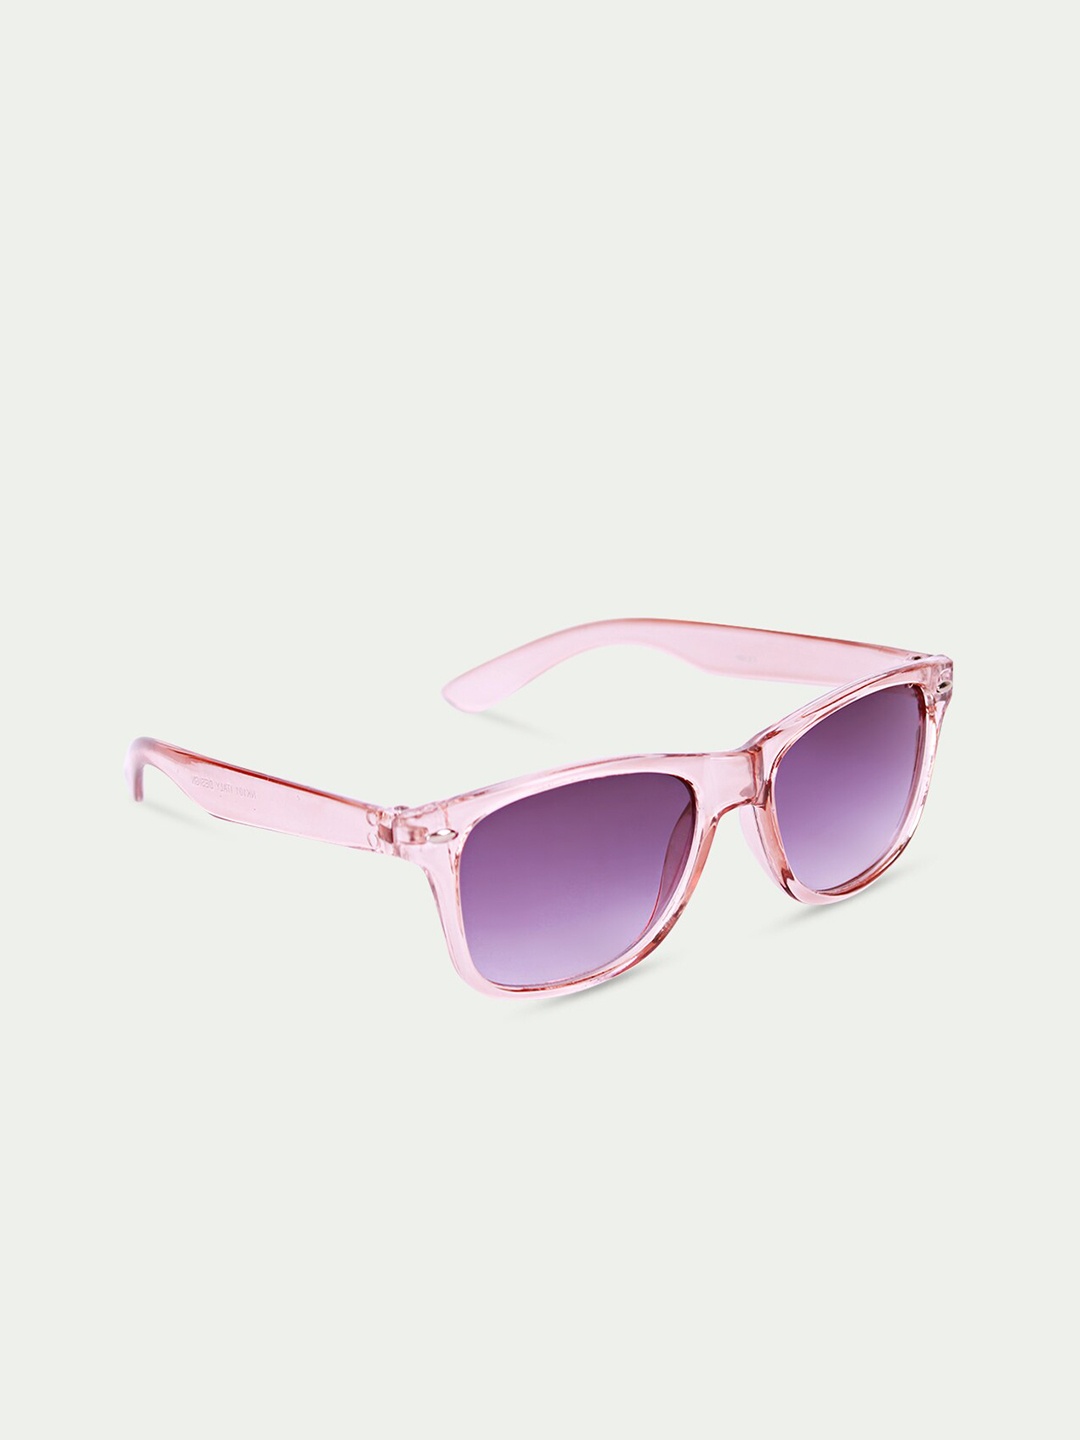 

DukieKooky Unisex Kids Grey Lens & Pink Wayfarer Sunglasses with UV Protected Lens